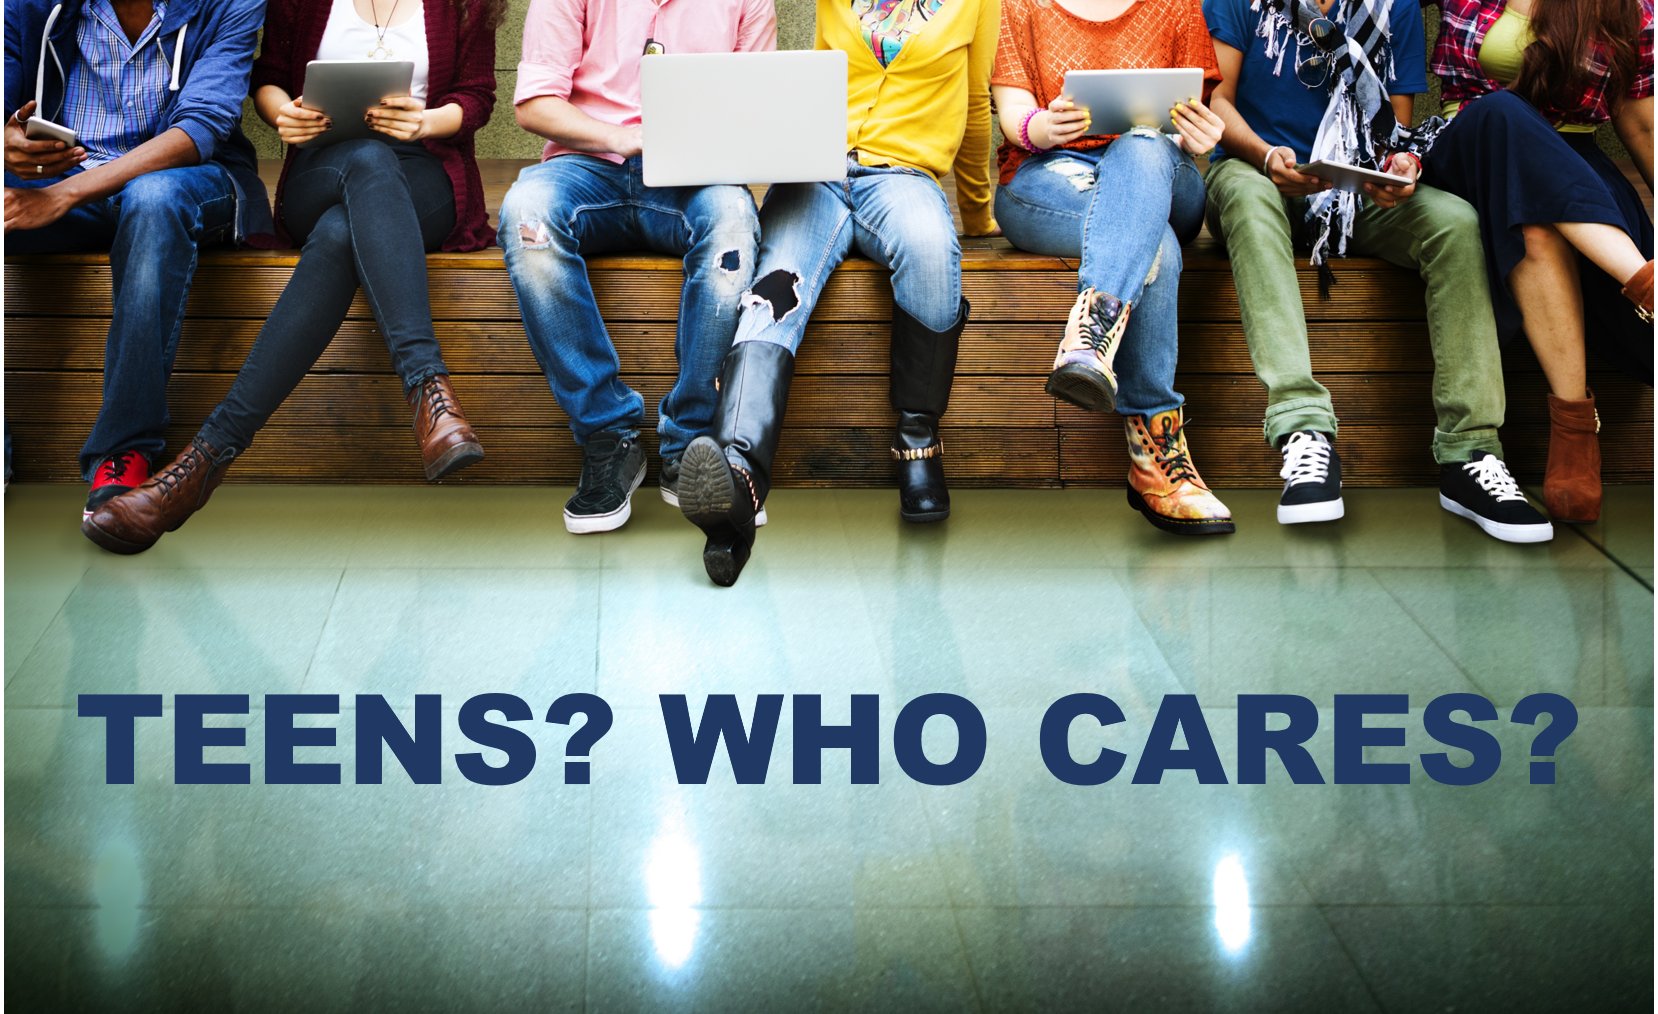 teens who cares